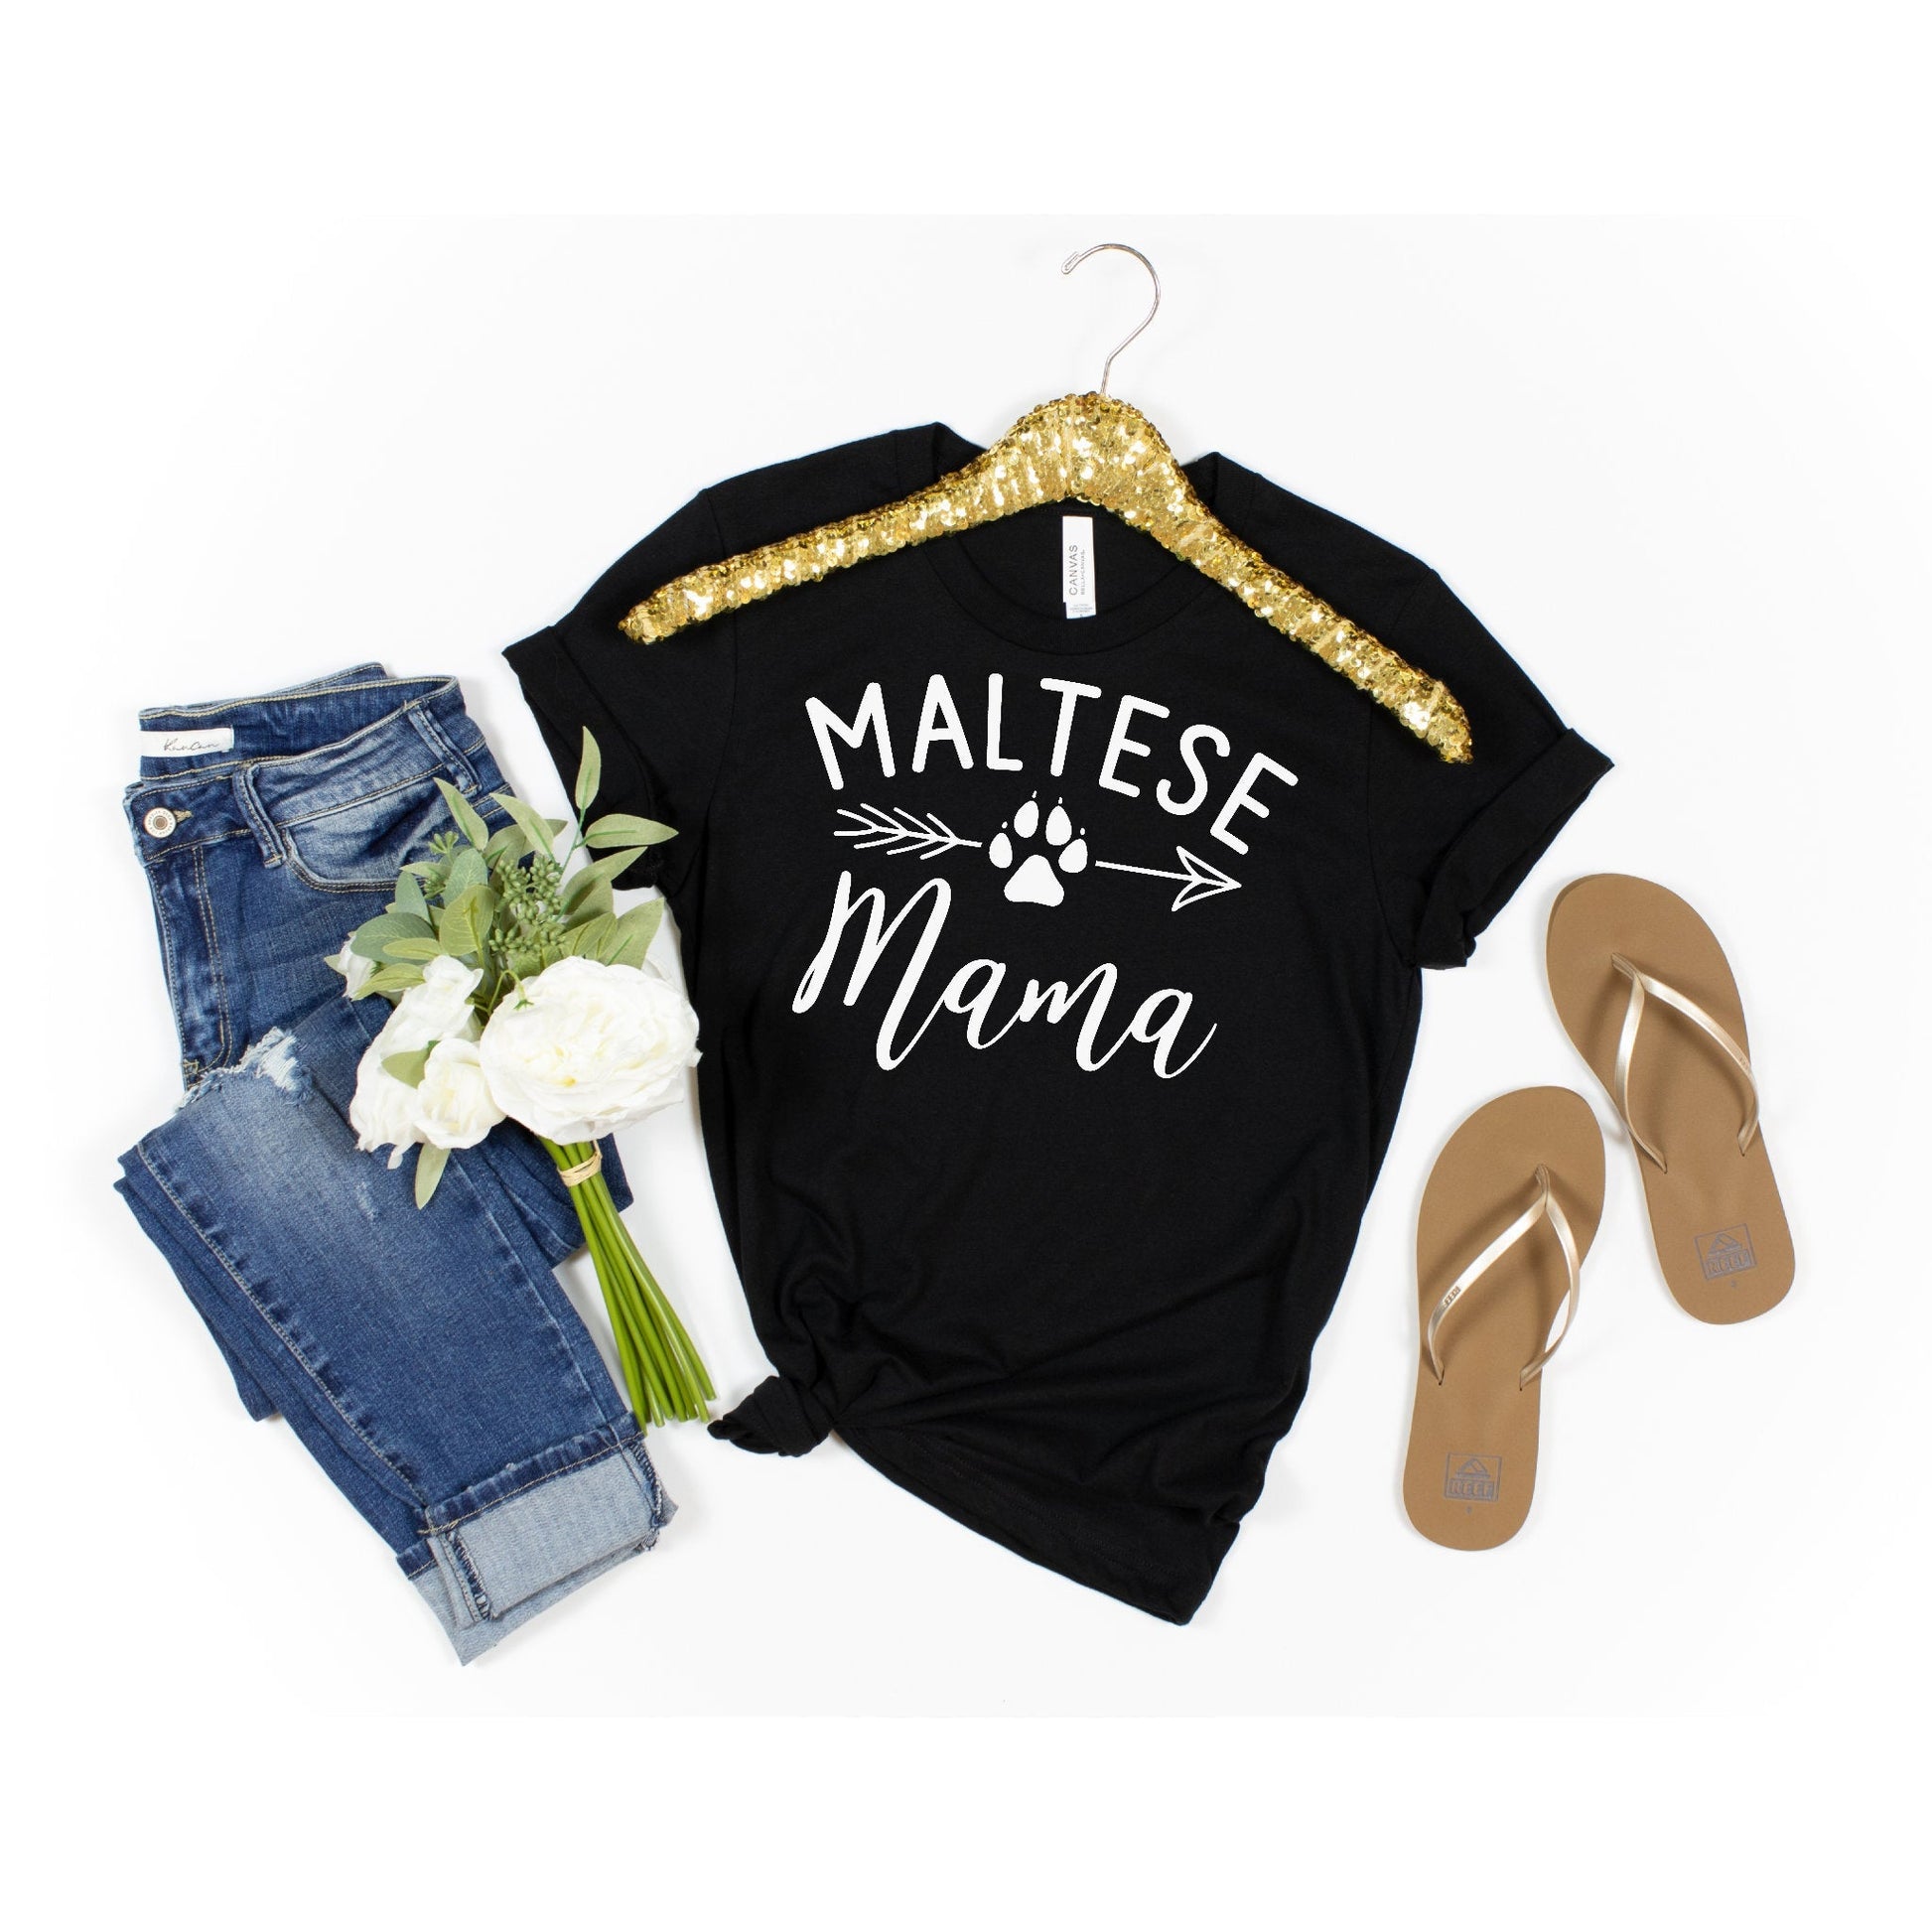 Maltese Mama Tshirt, Maltese Lover, Maltese Owner Shirt, Maltese Gift, Gift for Dog Lover, Fur Mama T-Shirt, Dog Mama Shirt - Premium  - Just $24.50! Shop now at Nine Thirty Nine Design